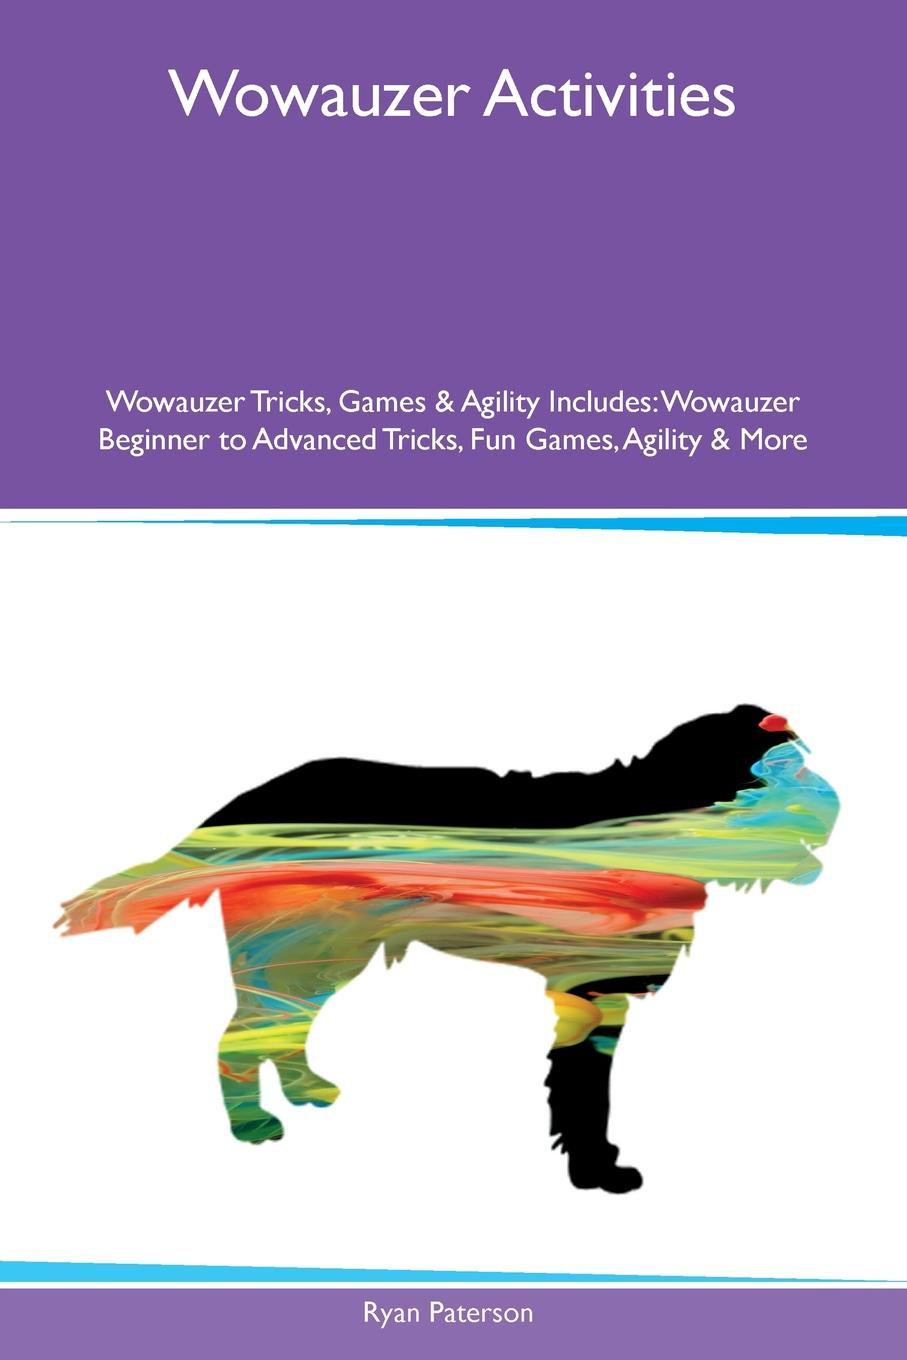 Wowauzer Activities Wowauzer Tricks, Games & Agility Includes. Wowauzer Beginner to Advanced Tricks, Fun Games, Agility & More